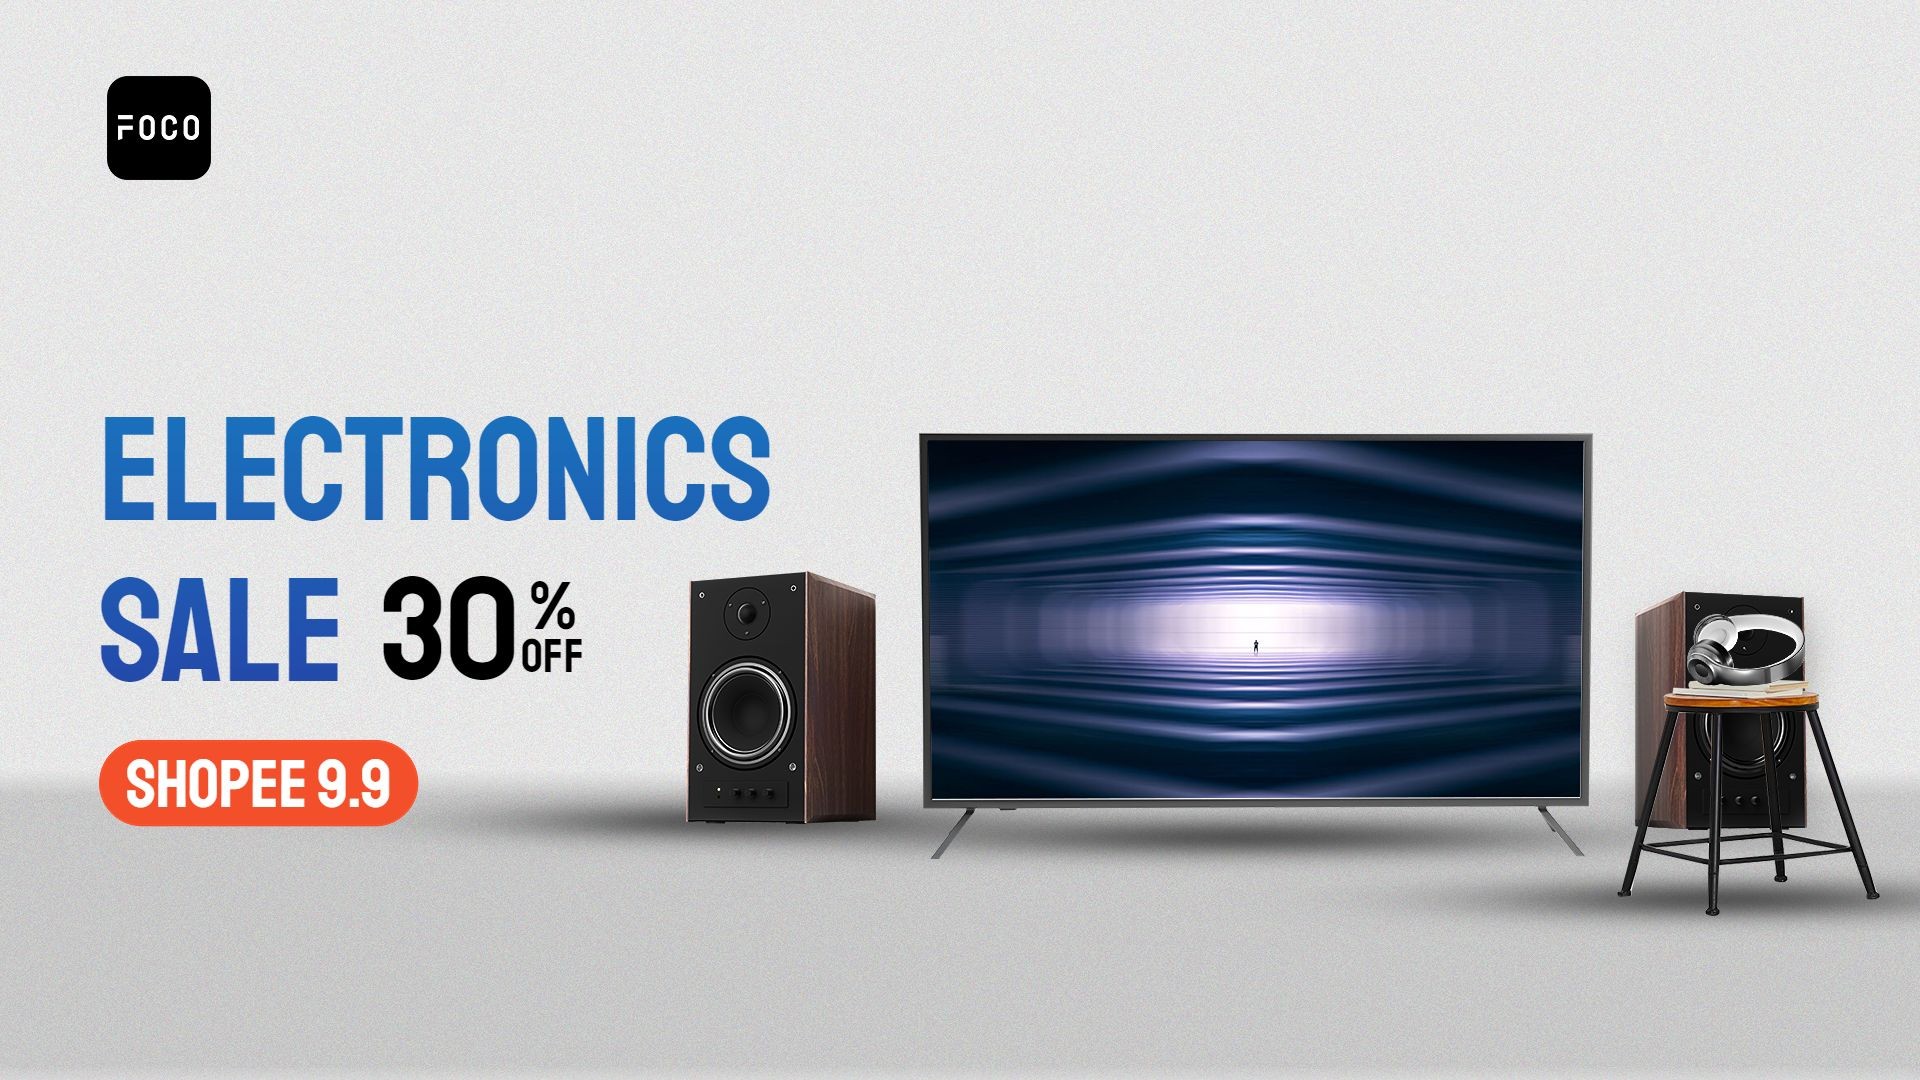 Shopee 9.9 Home Smart Electronics Discount Sale Promo Ecommerce Banner预览效果